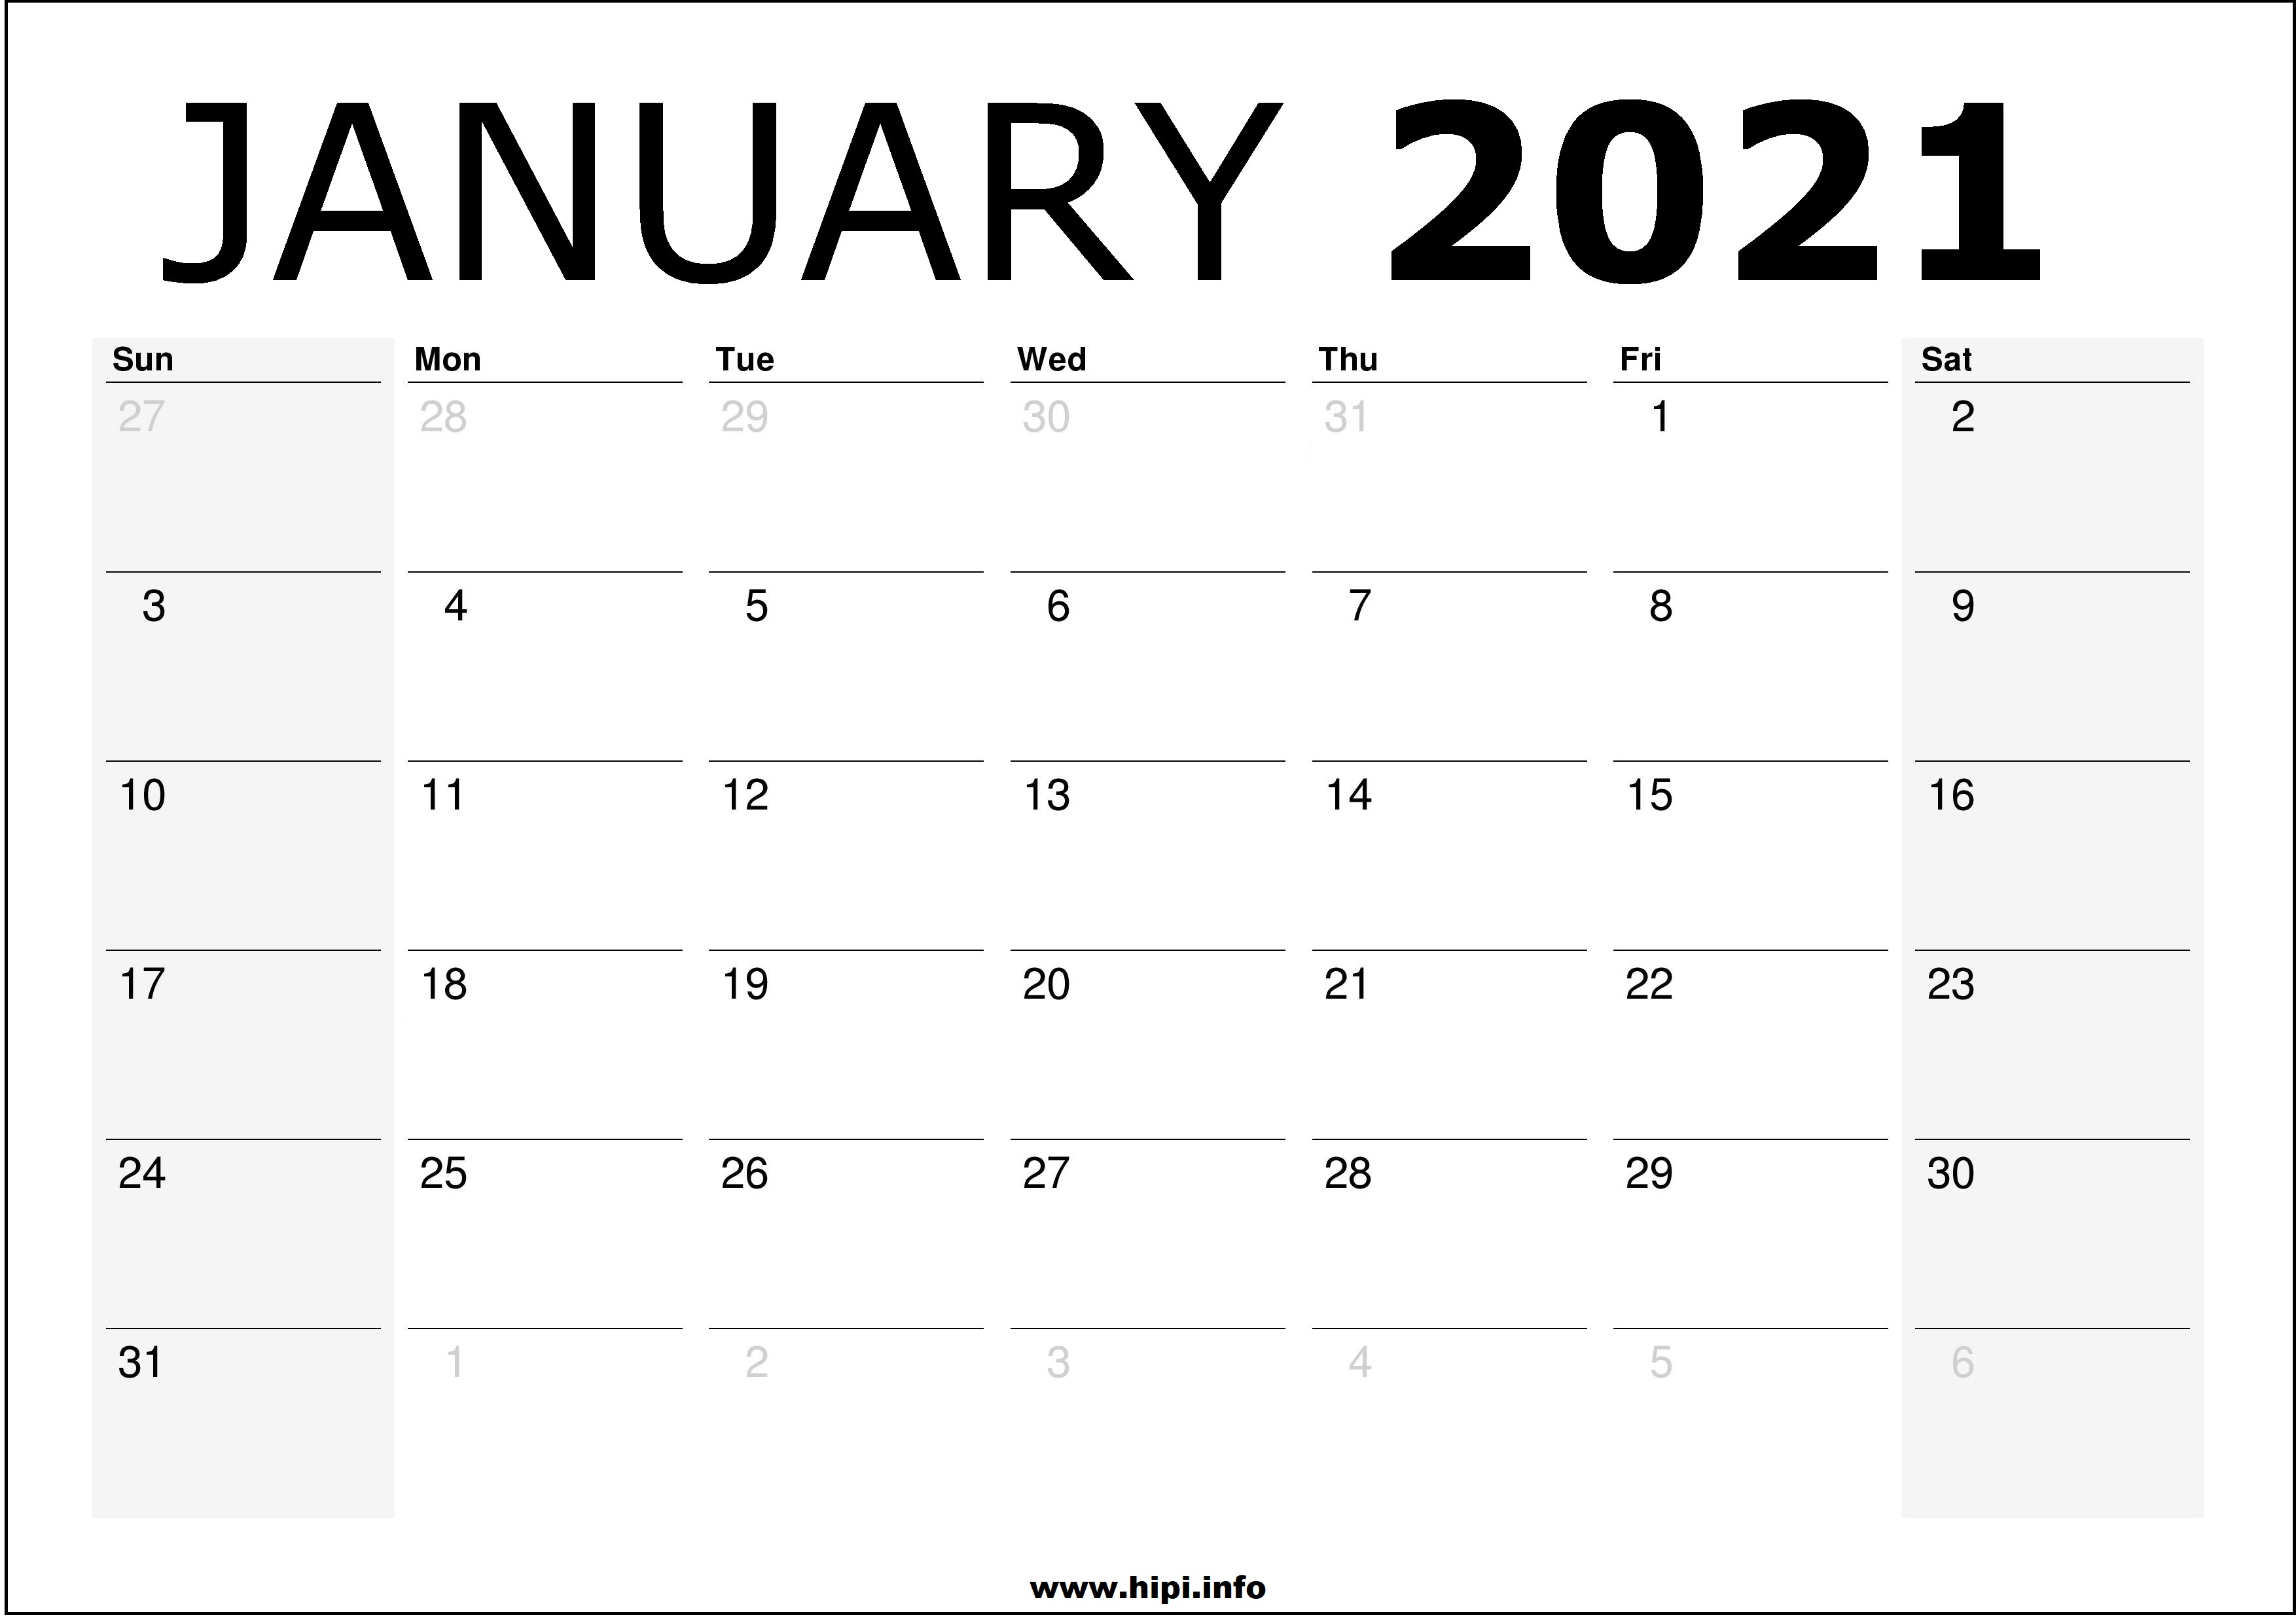 January 2021 Calendar Printable - Monthly Calendar Free ...